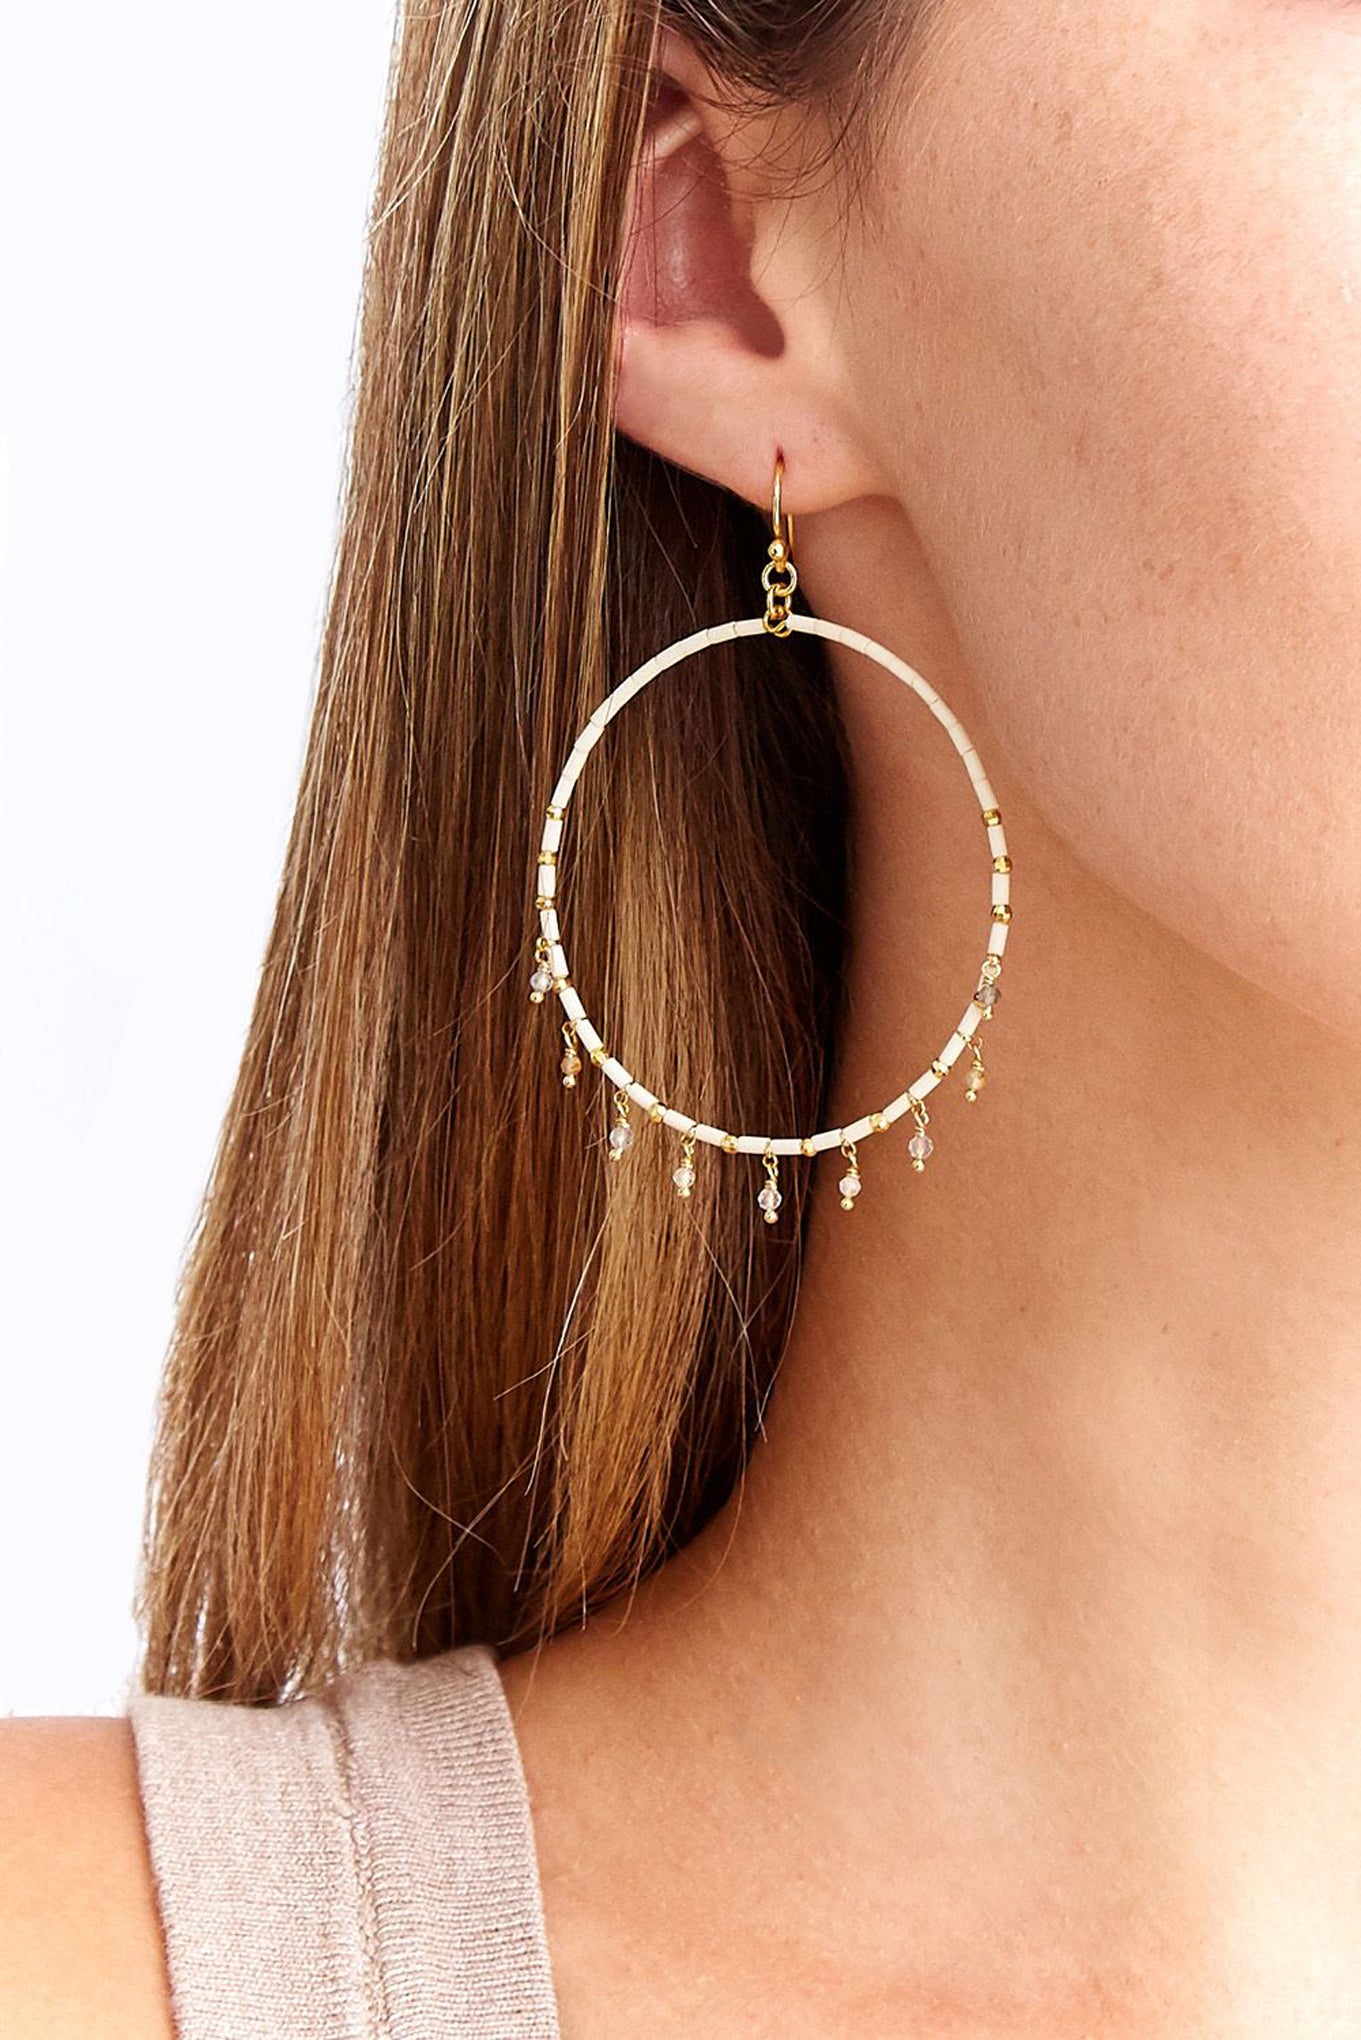 Chan Luu Gold Hoop Earrings in Cream Seed Beads with Labradorite Charms